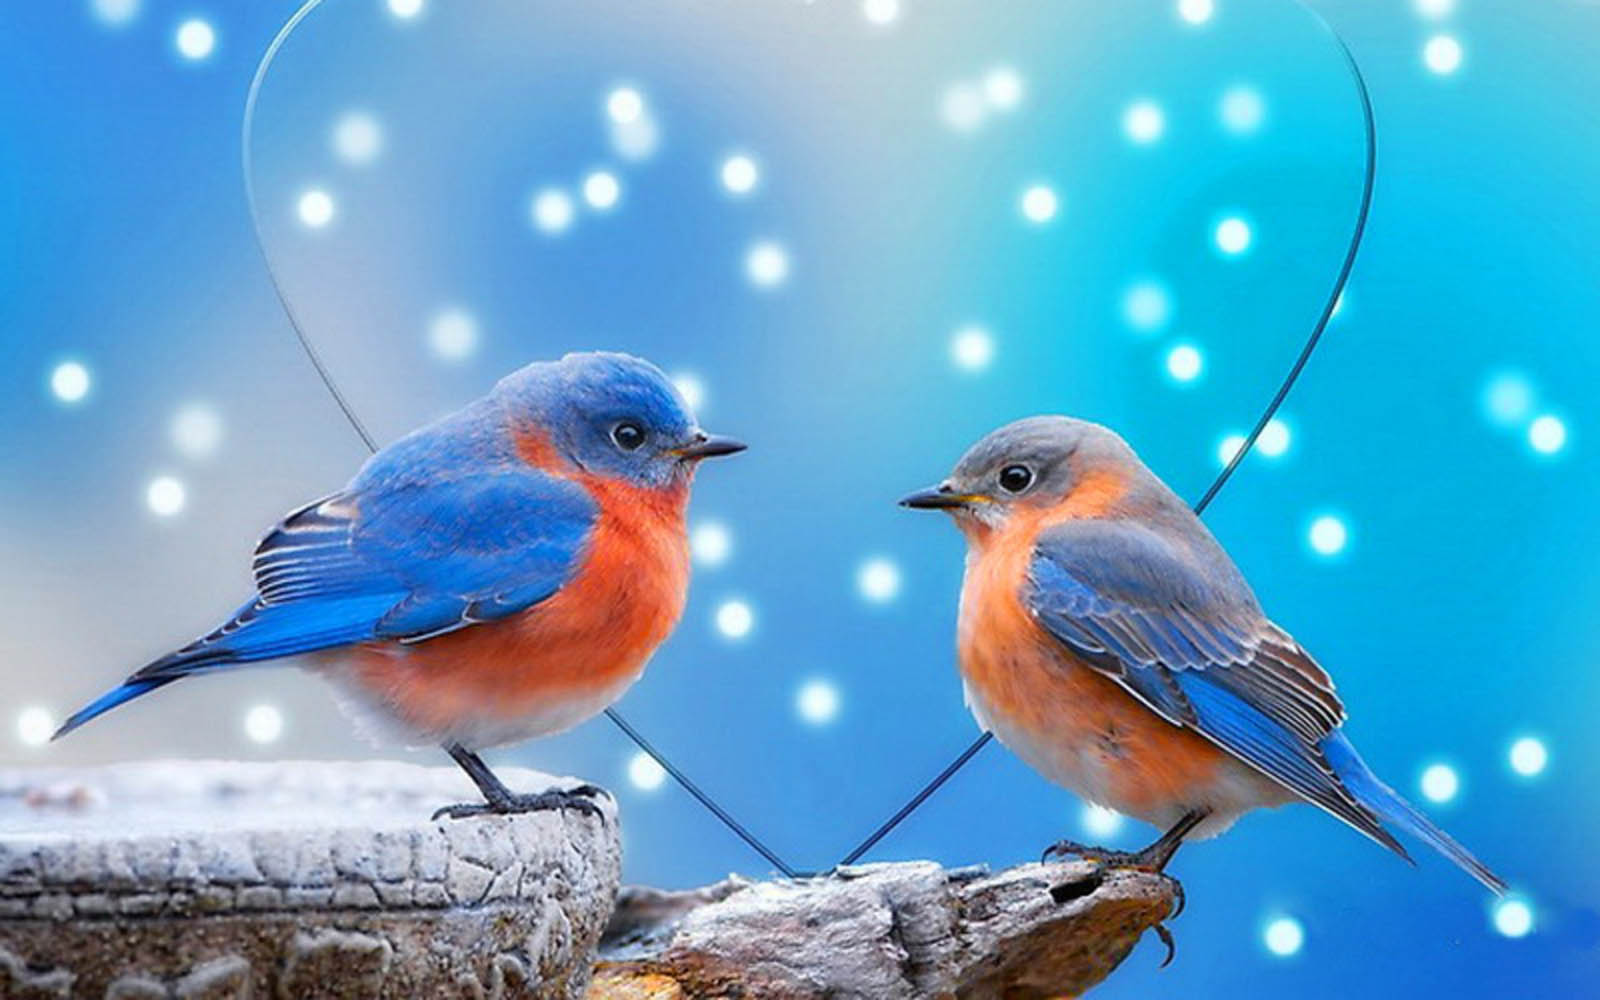 pájaros del amor fondo de pantalla,pájaro,bluebird del este,azulejo,bluebird de montaña,pájaro cantor